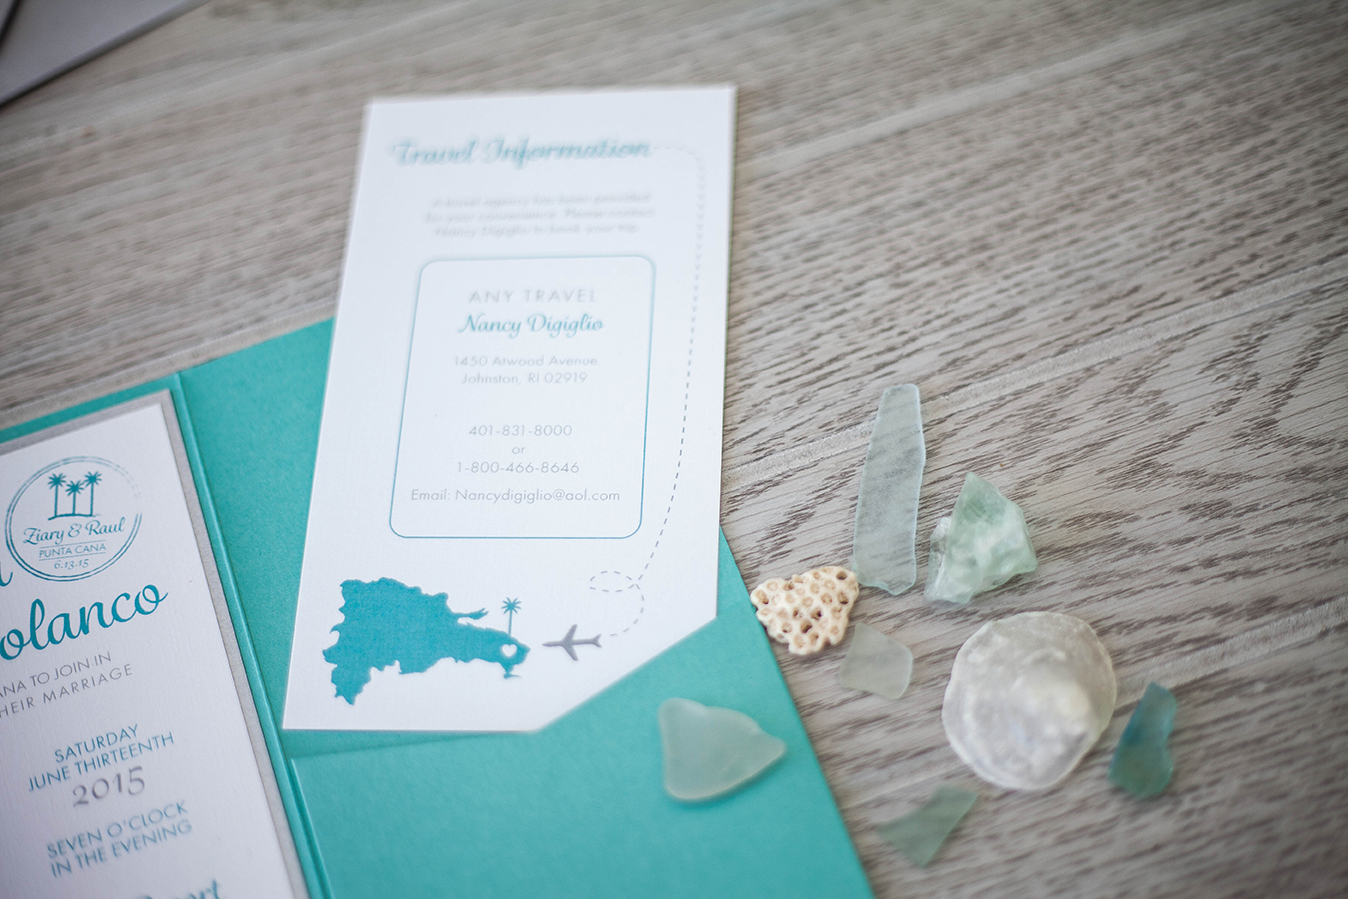 Turquoise pocket fold invitation | Destination Wedding